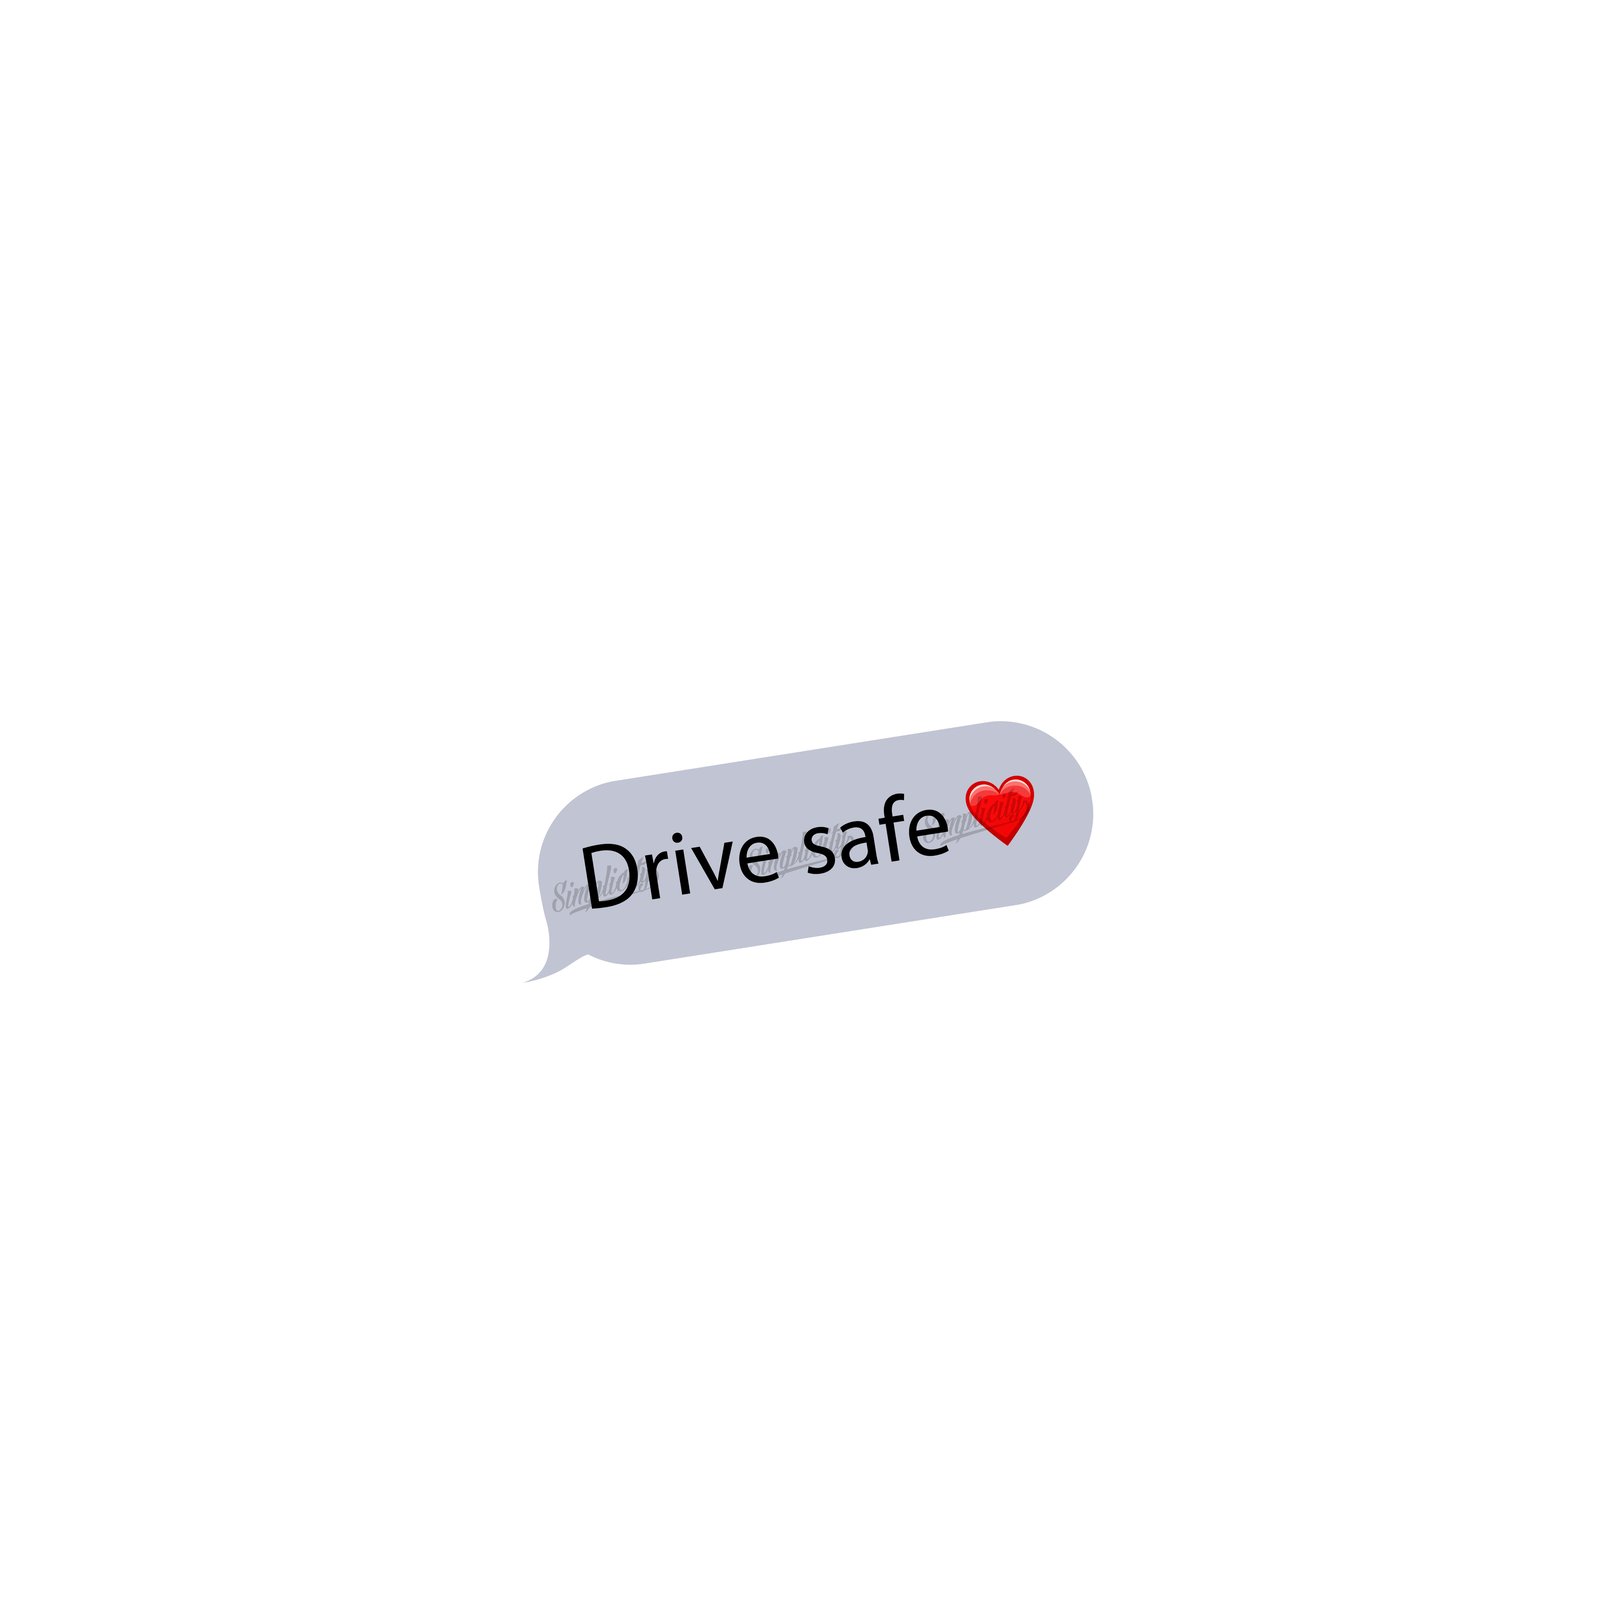 i said drive safe in spanish